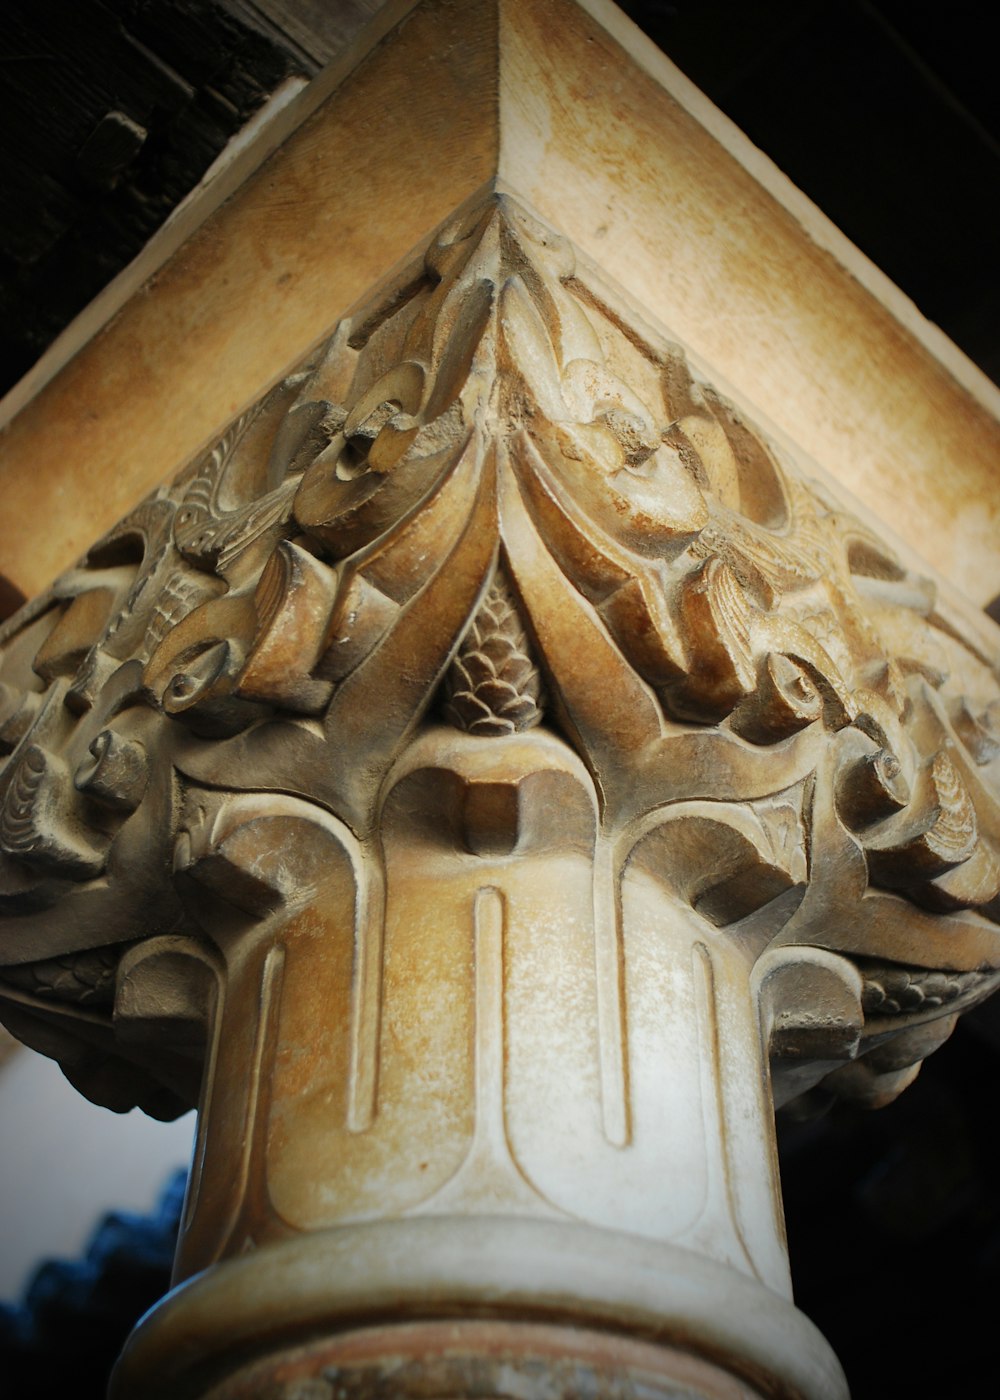 a close up of a pillar with a decorative design